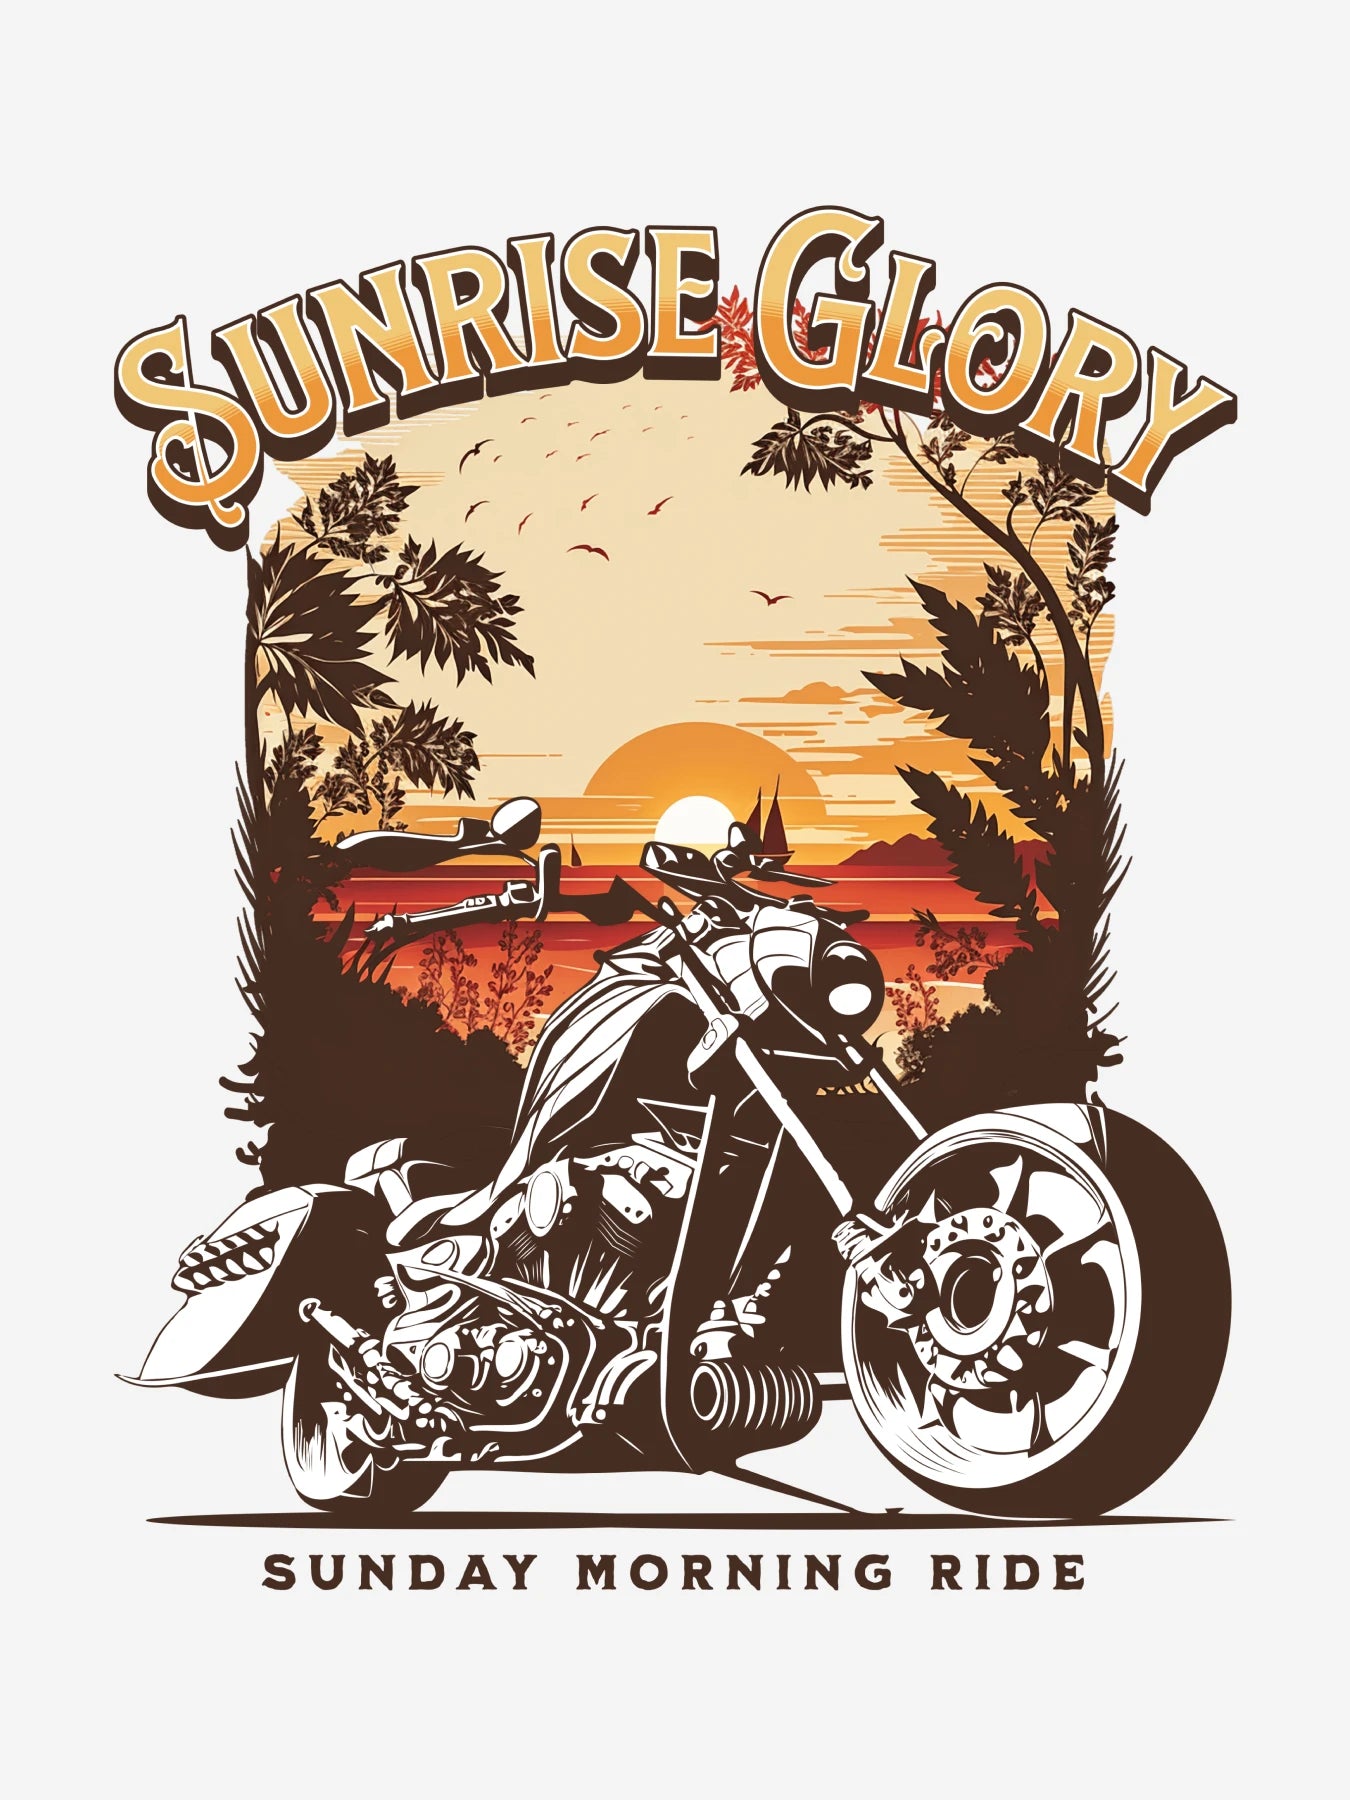 Sunrise Glory Ride